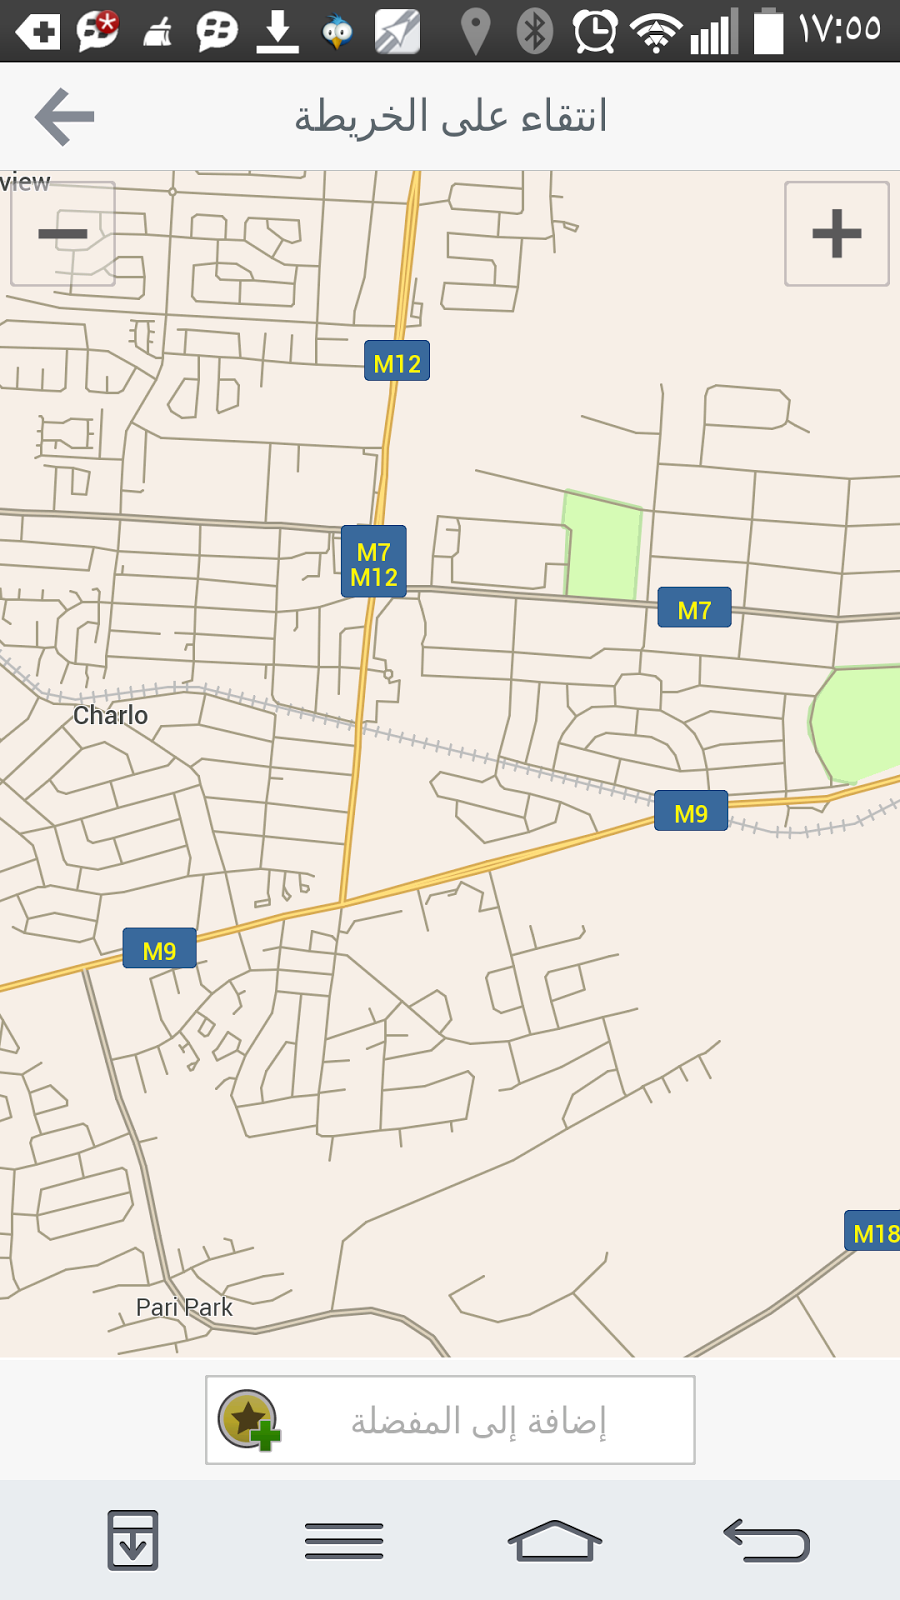 GPS CoPilot تطبيق مجاني للملاحة [ لا يحتاج انترنت ] | بحرية درويد